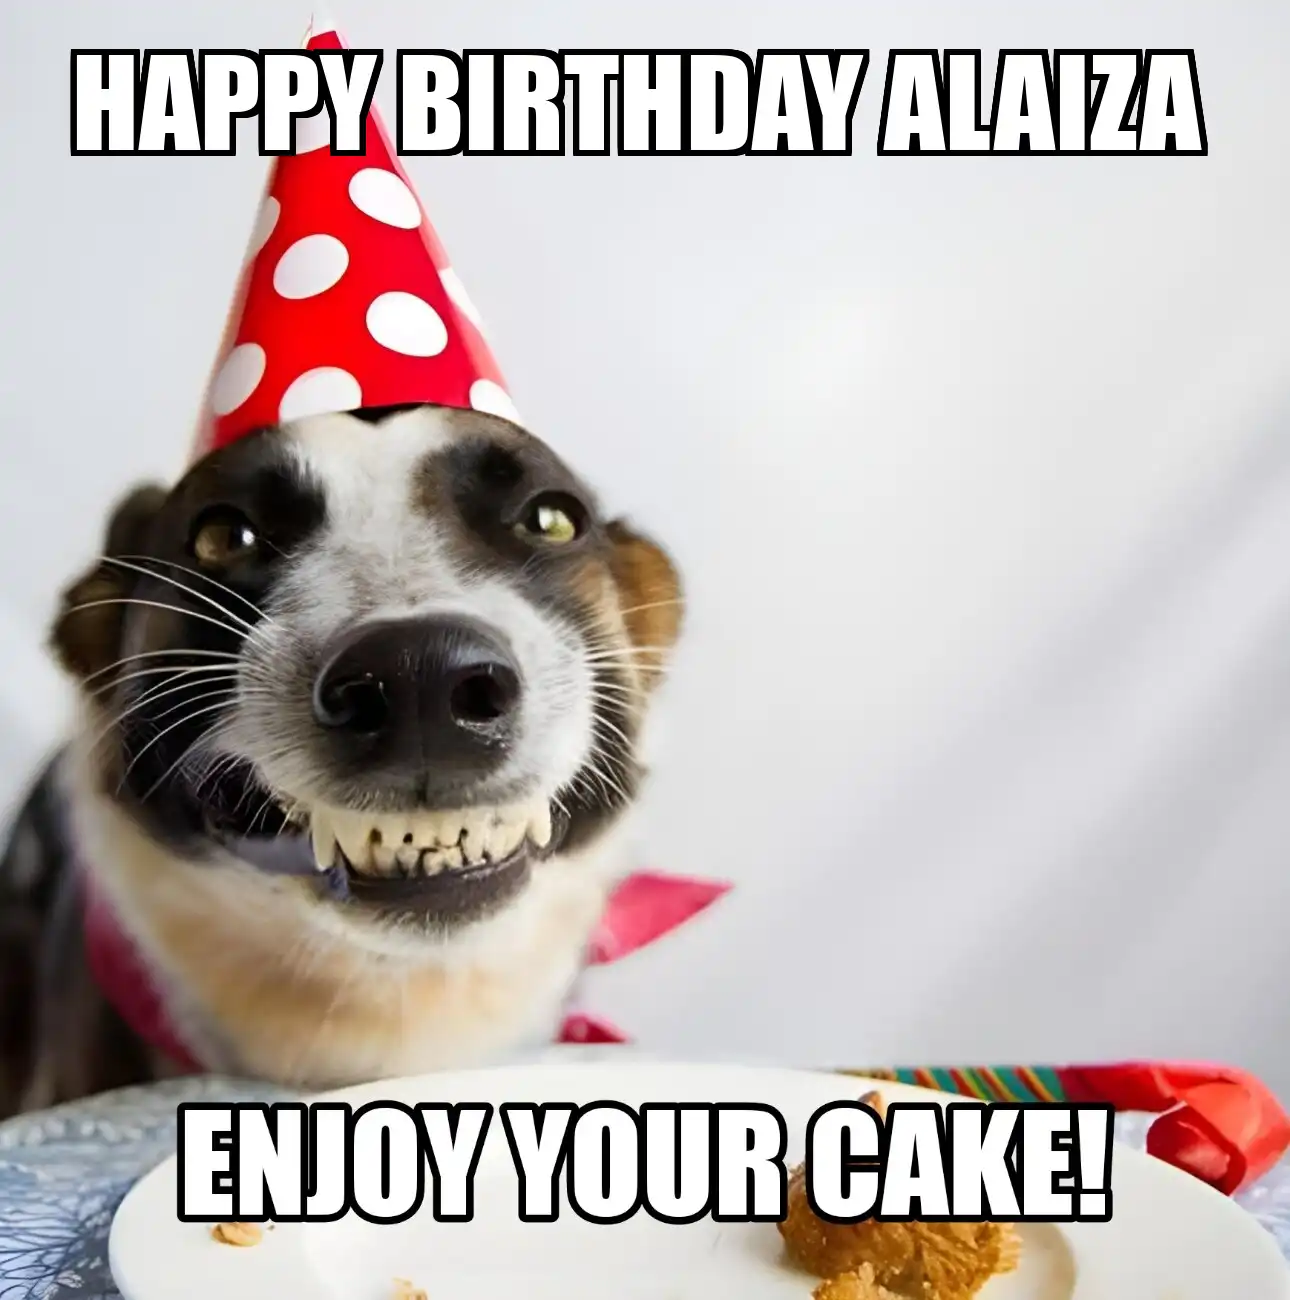 Happy Birthday Alaiza Enjoy Your Cake Dog Meme